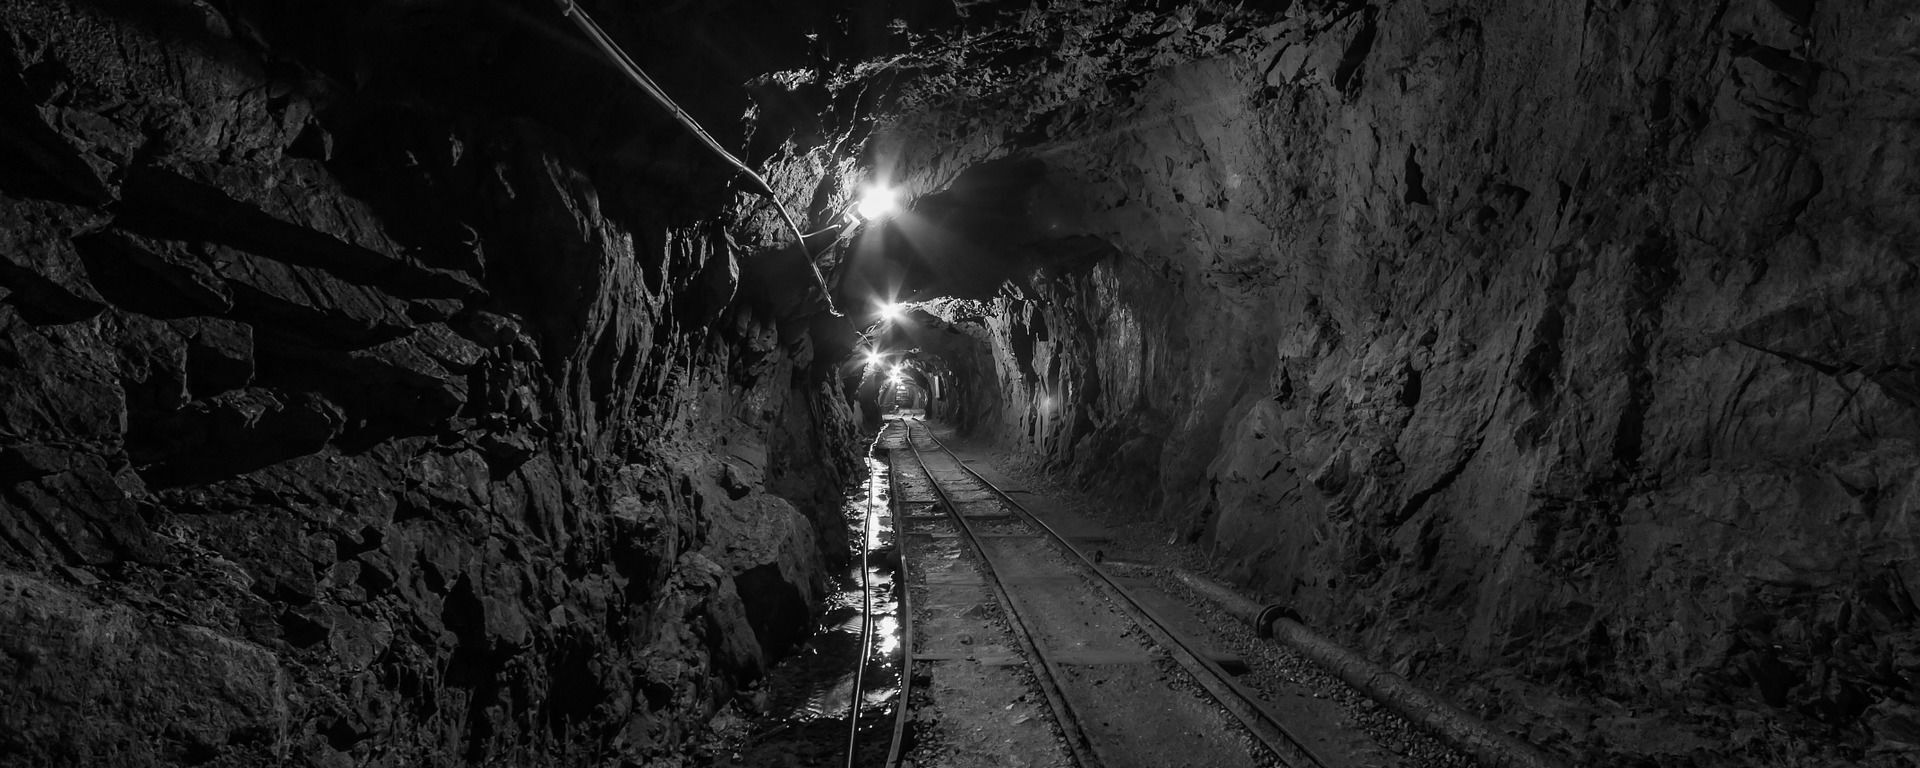 Un túnel en una mina - Sputnik Mundo, 1920, 25.11.2021